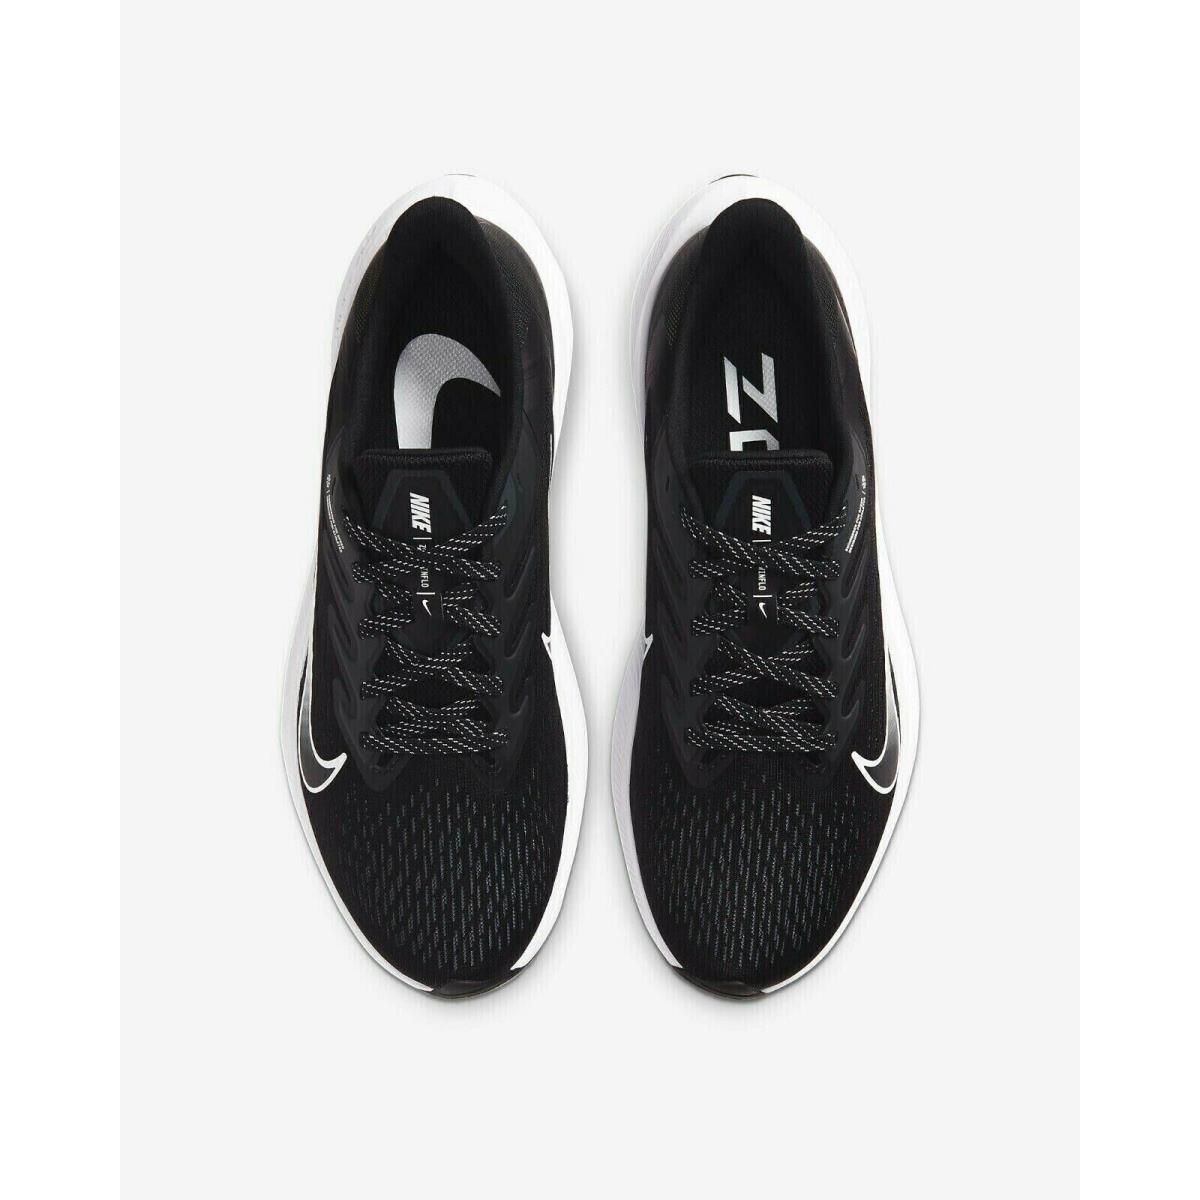 Nike shoes Zoom Winflo - Black 1